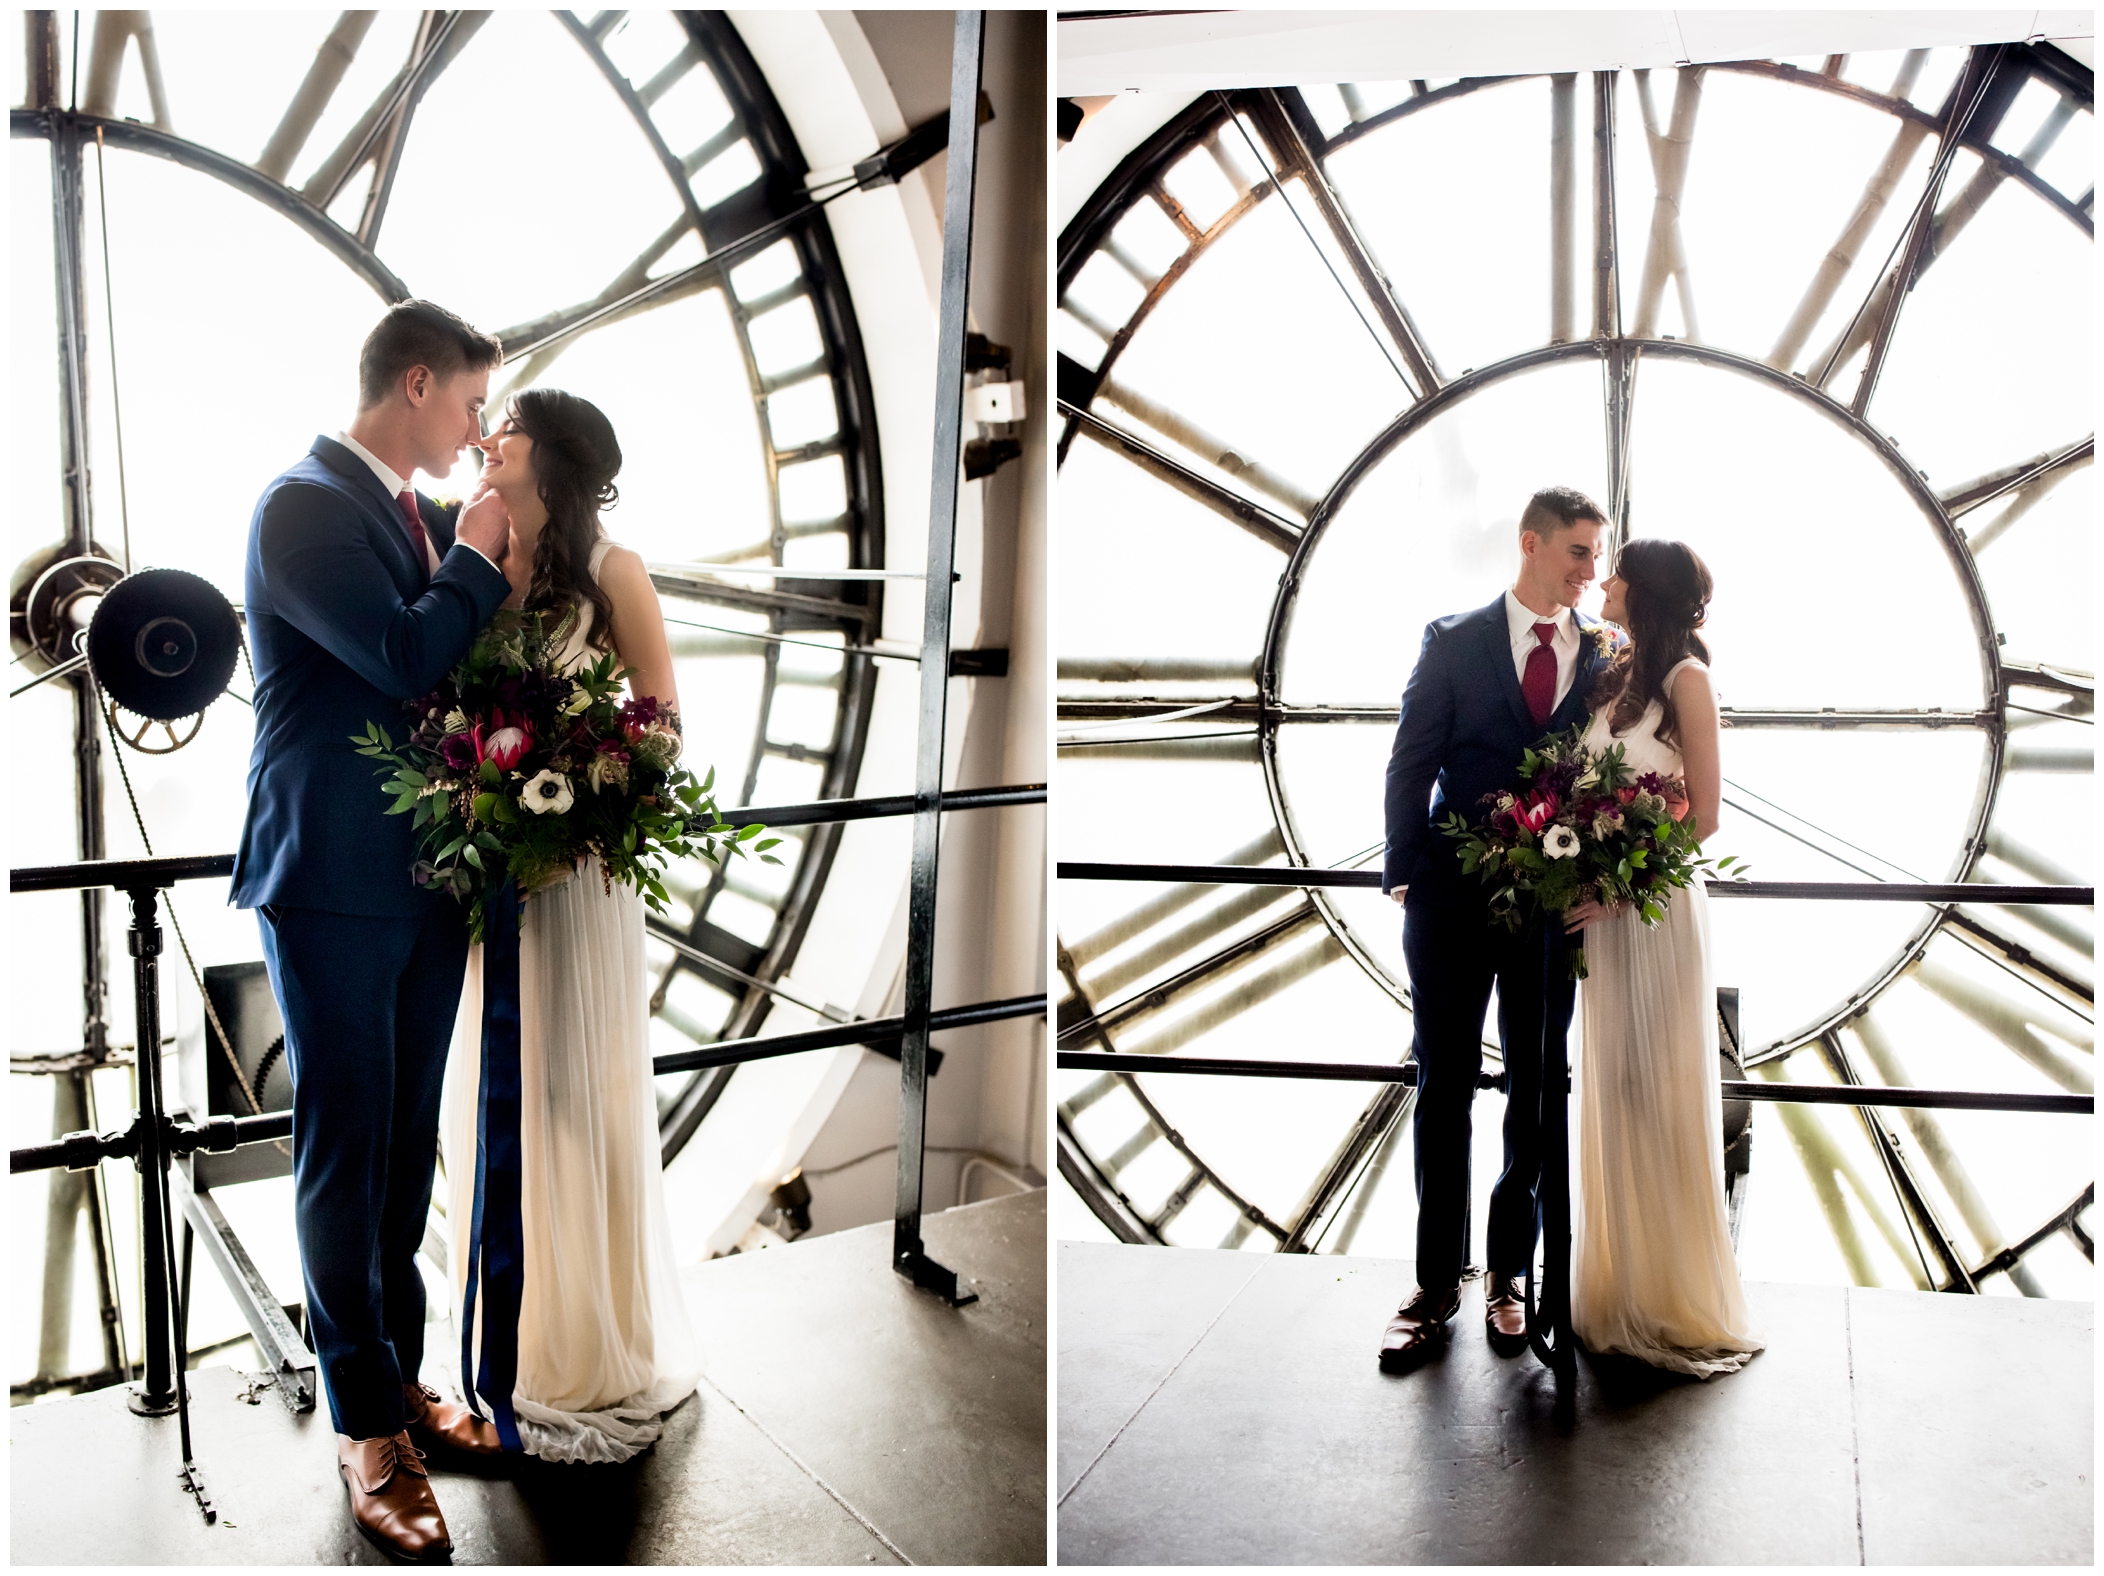 Clock tower events Denver wedding photography 